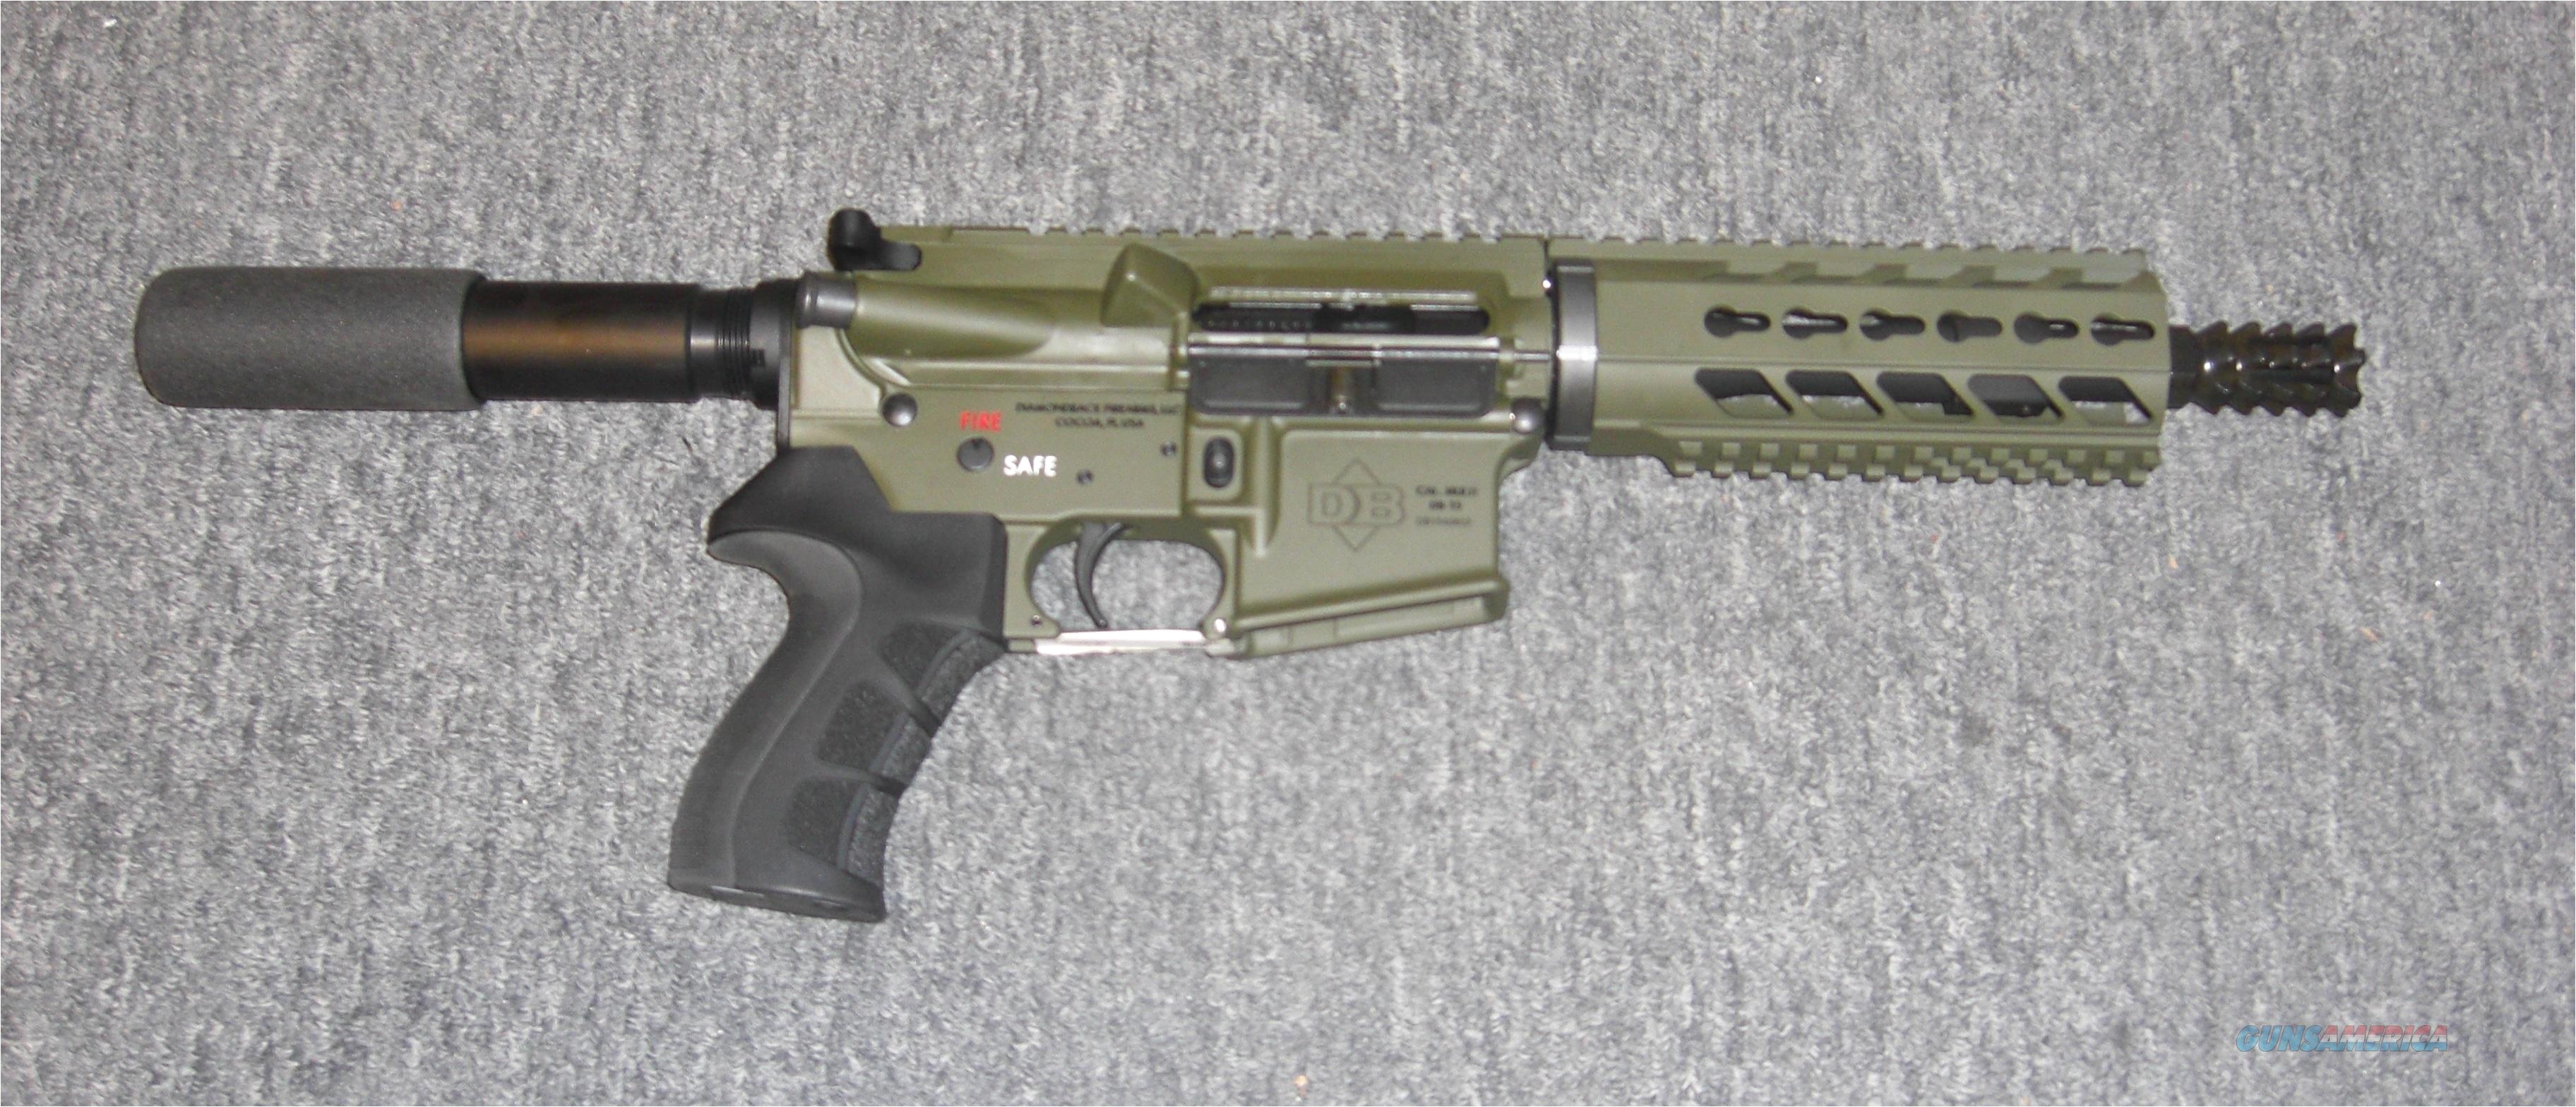 db 15 pistol w od green finish free floating handguard guns pistols